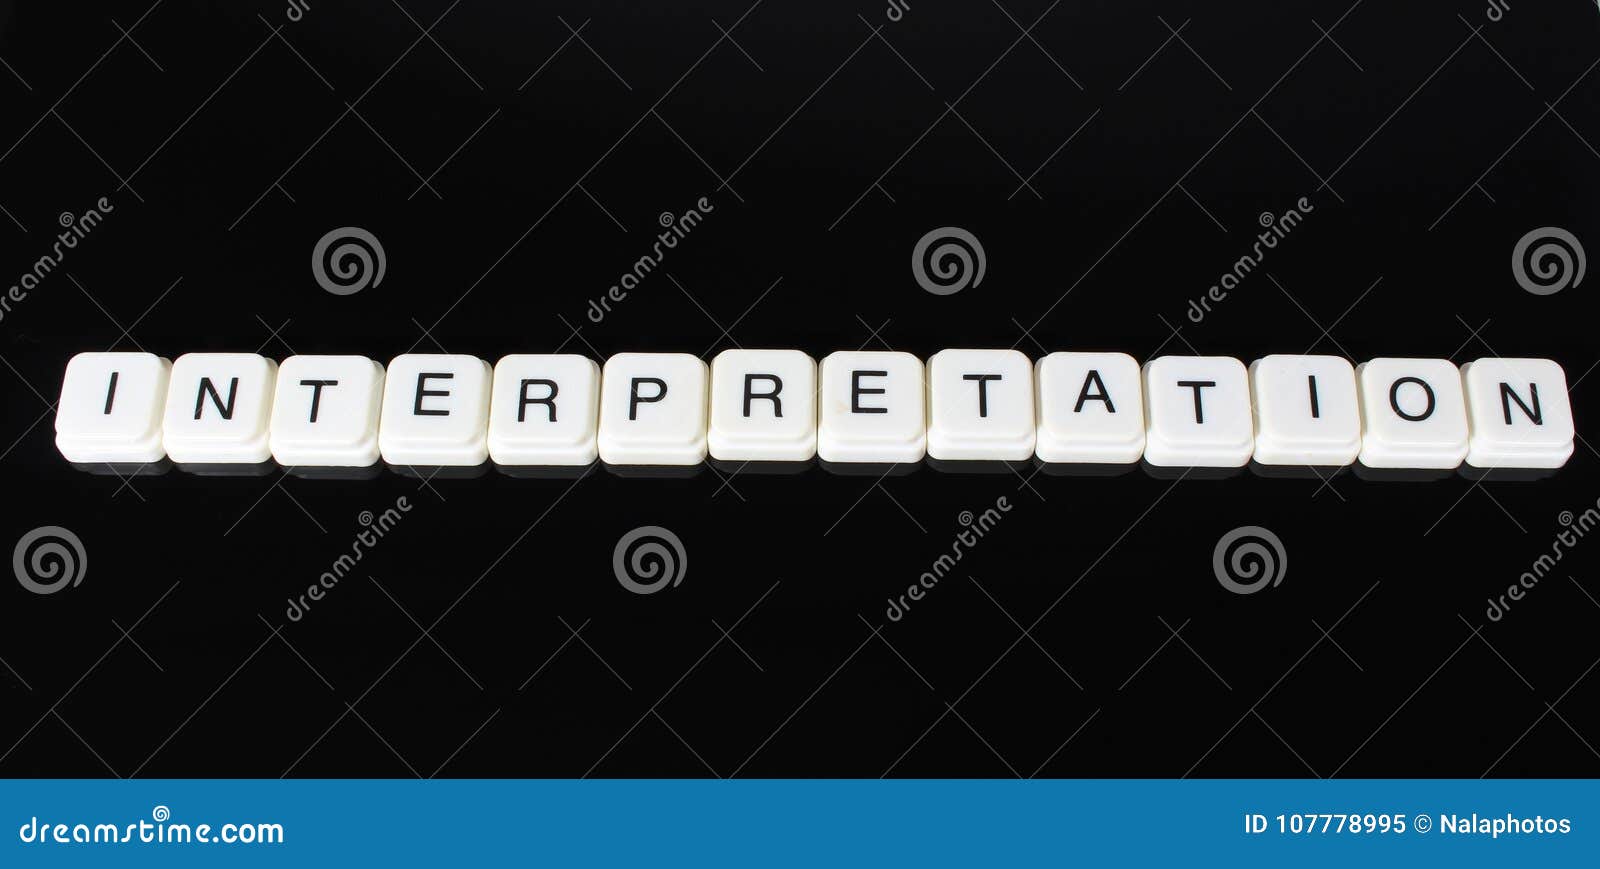 interpretation text word title caption label cover backdrop background. alphabet letter toy blocks on black reflective background.